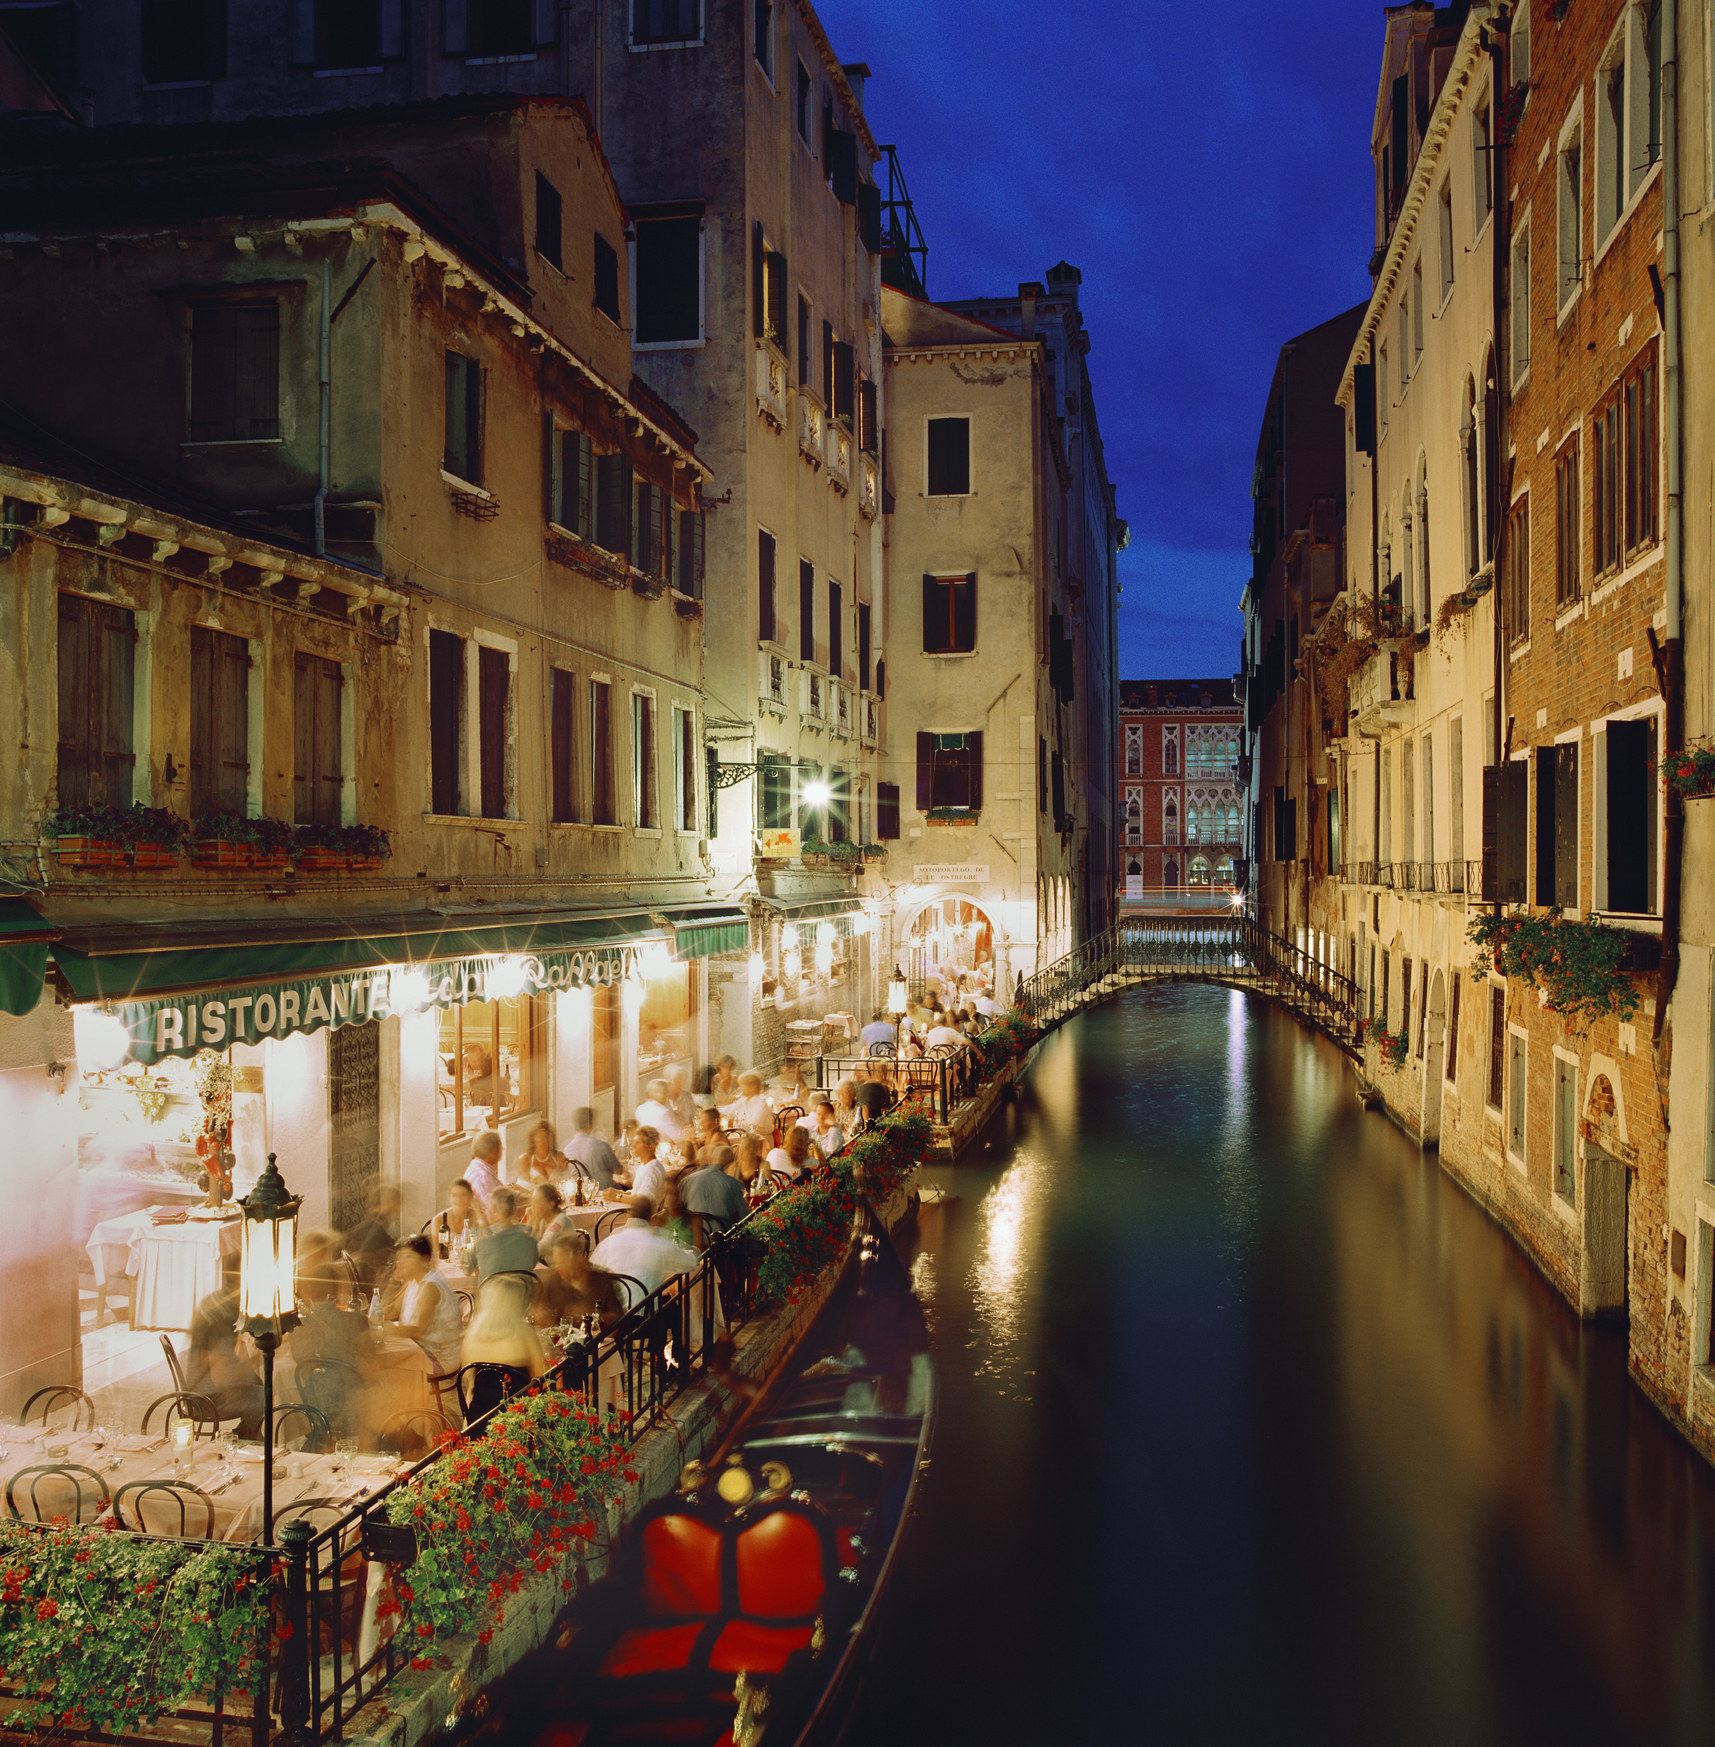 A restaurant near the canal in Venice.